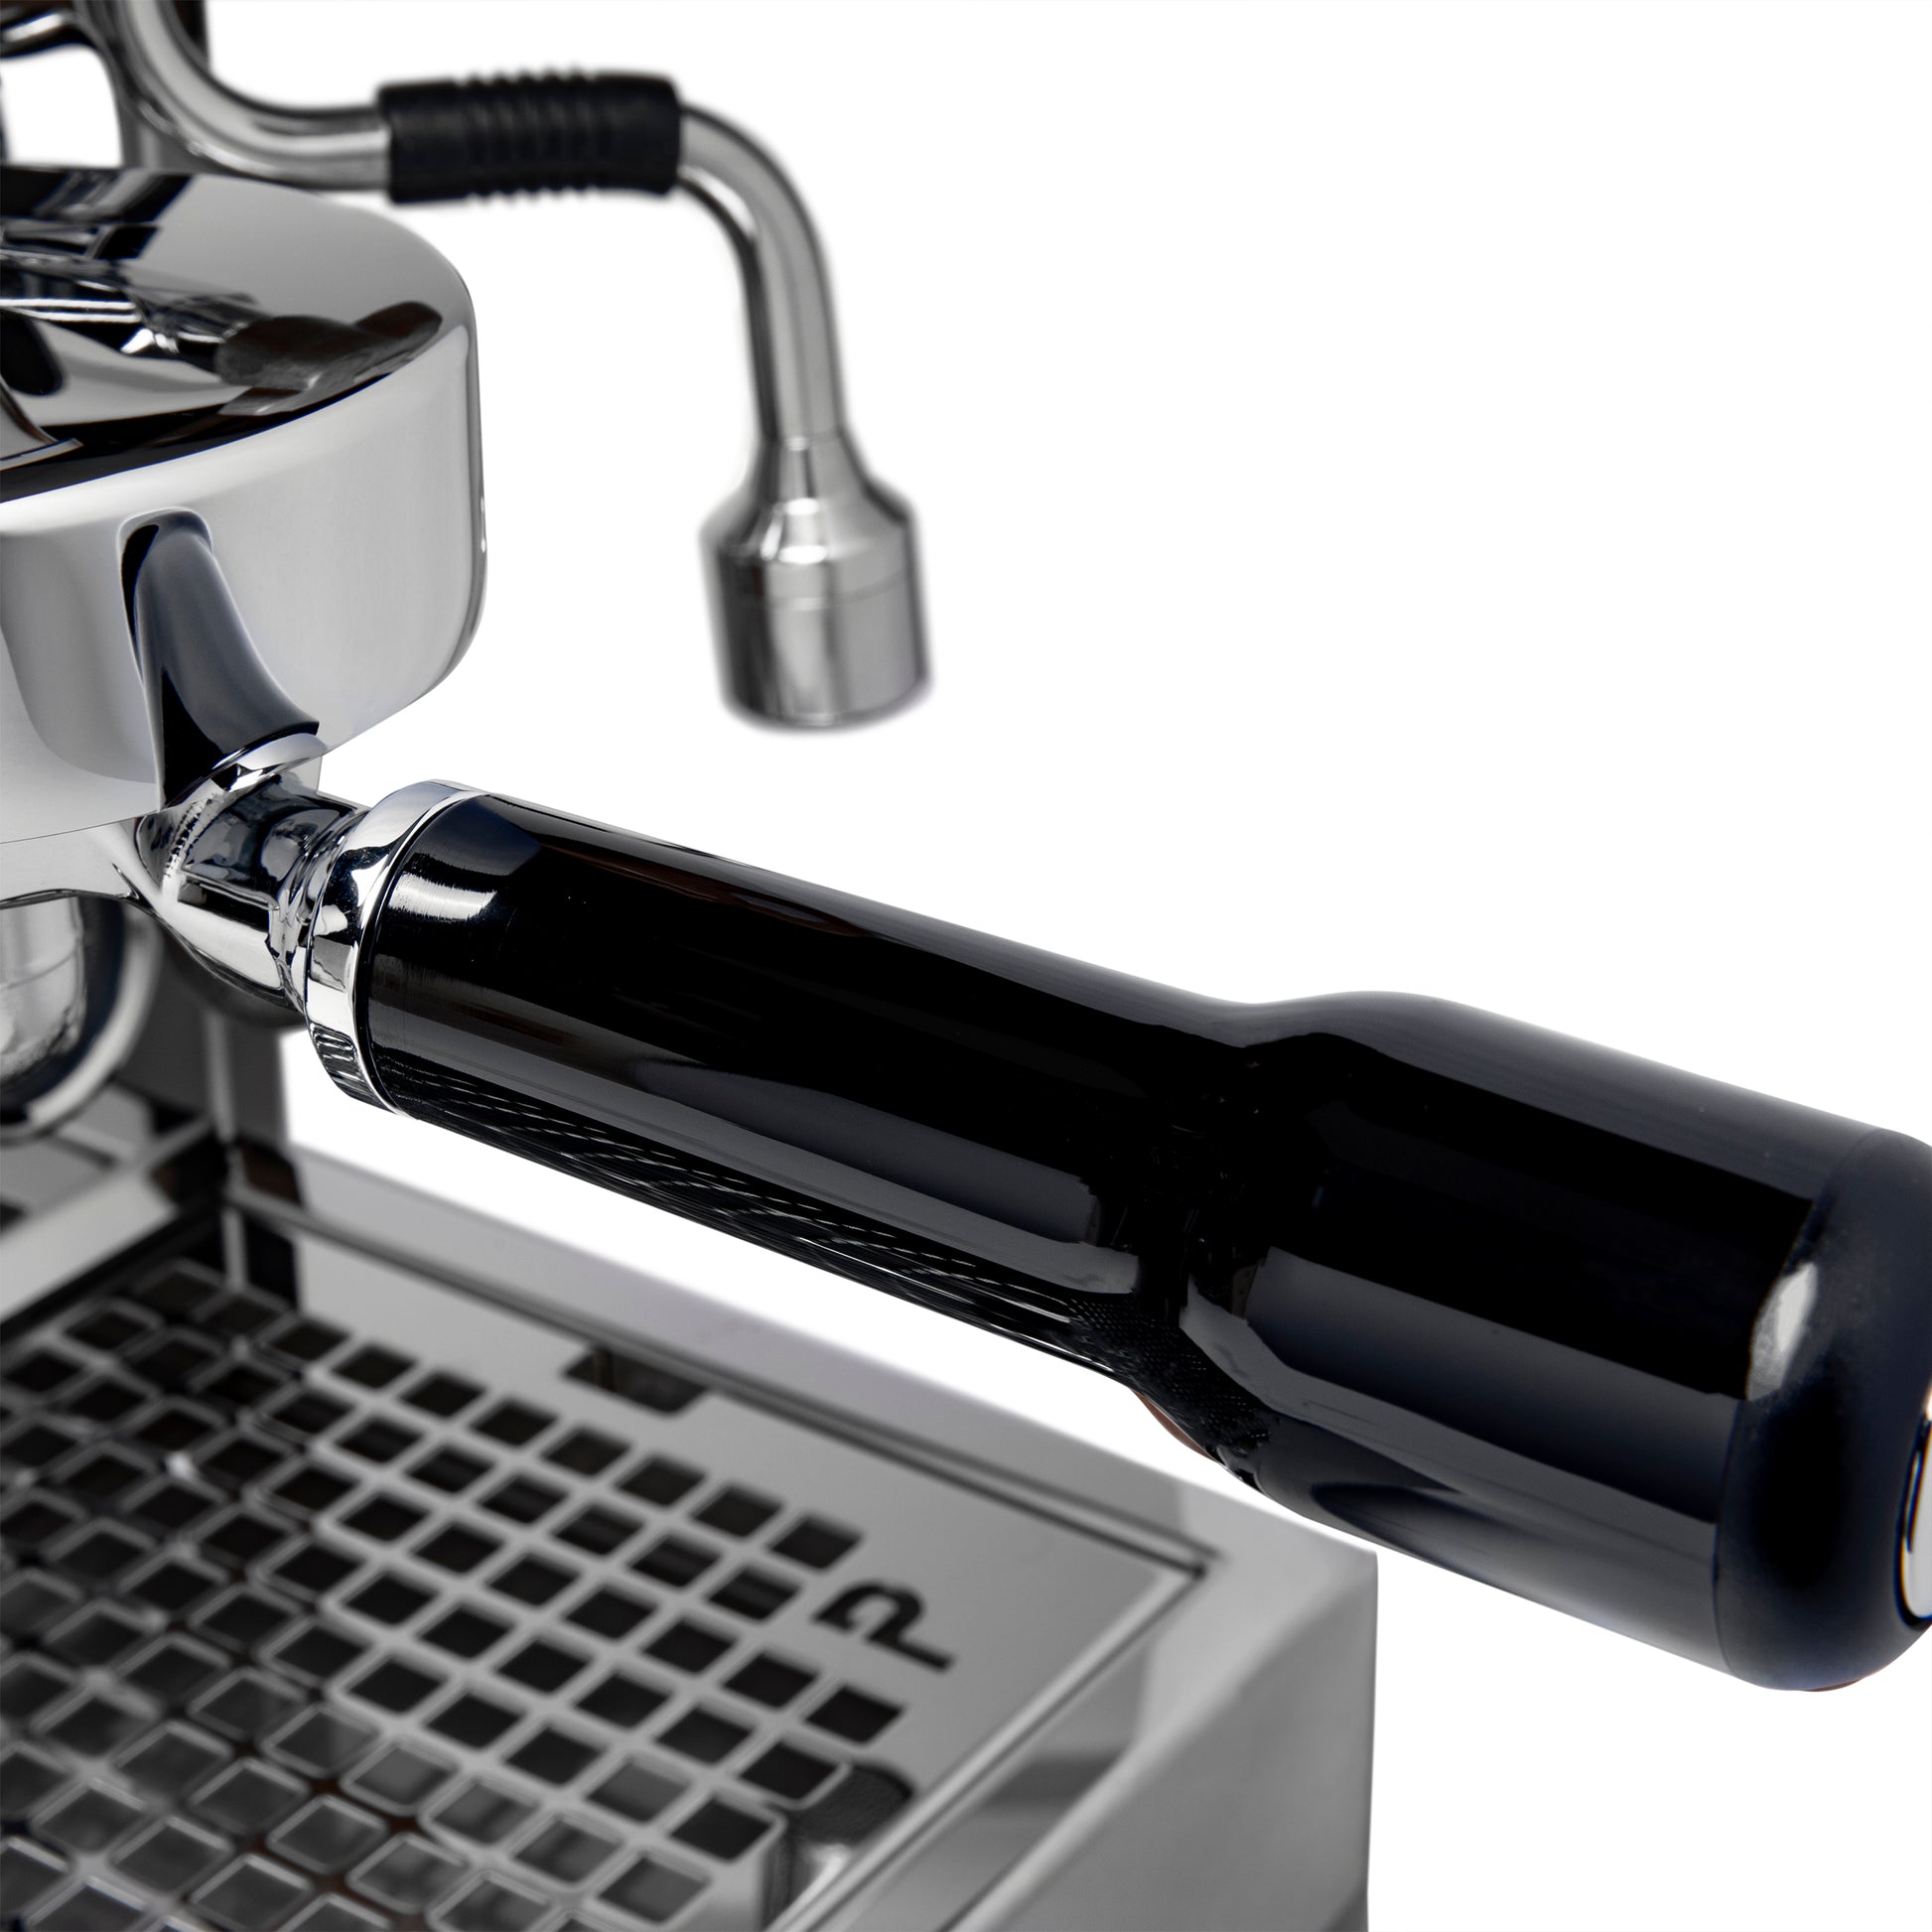 Valve gasket water tank for coffee machine SWEET TASTE mini parts